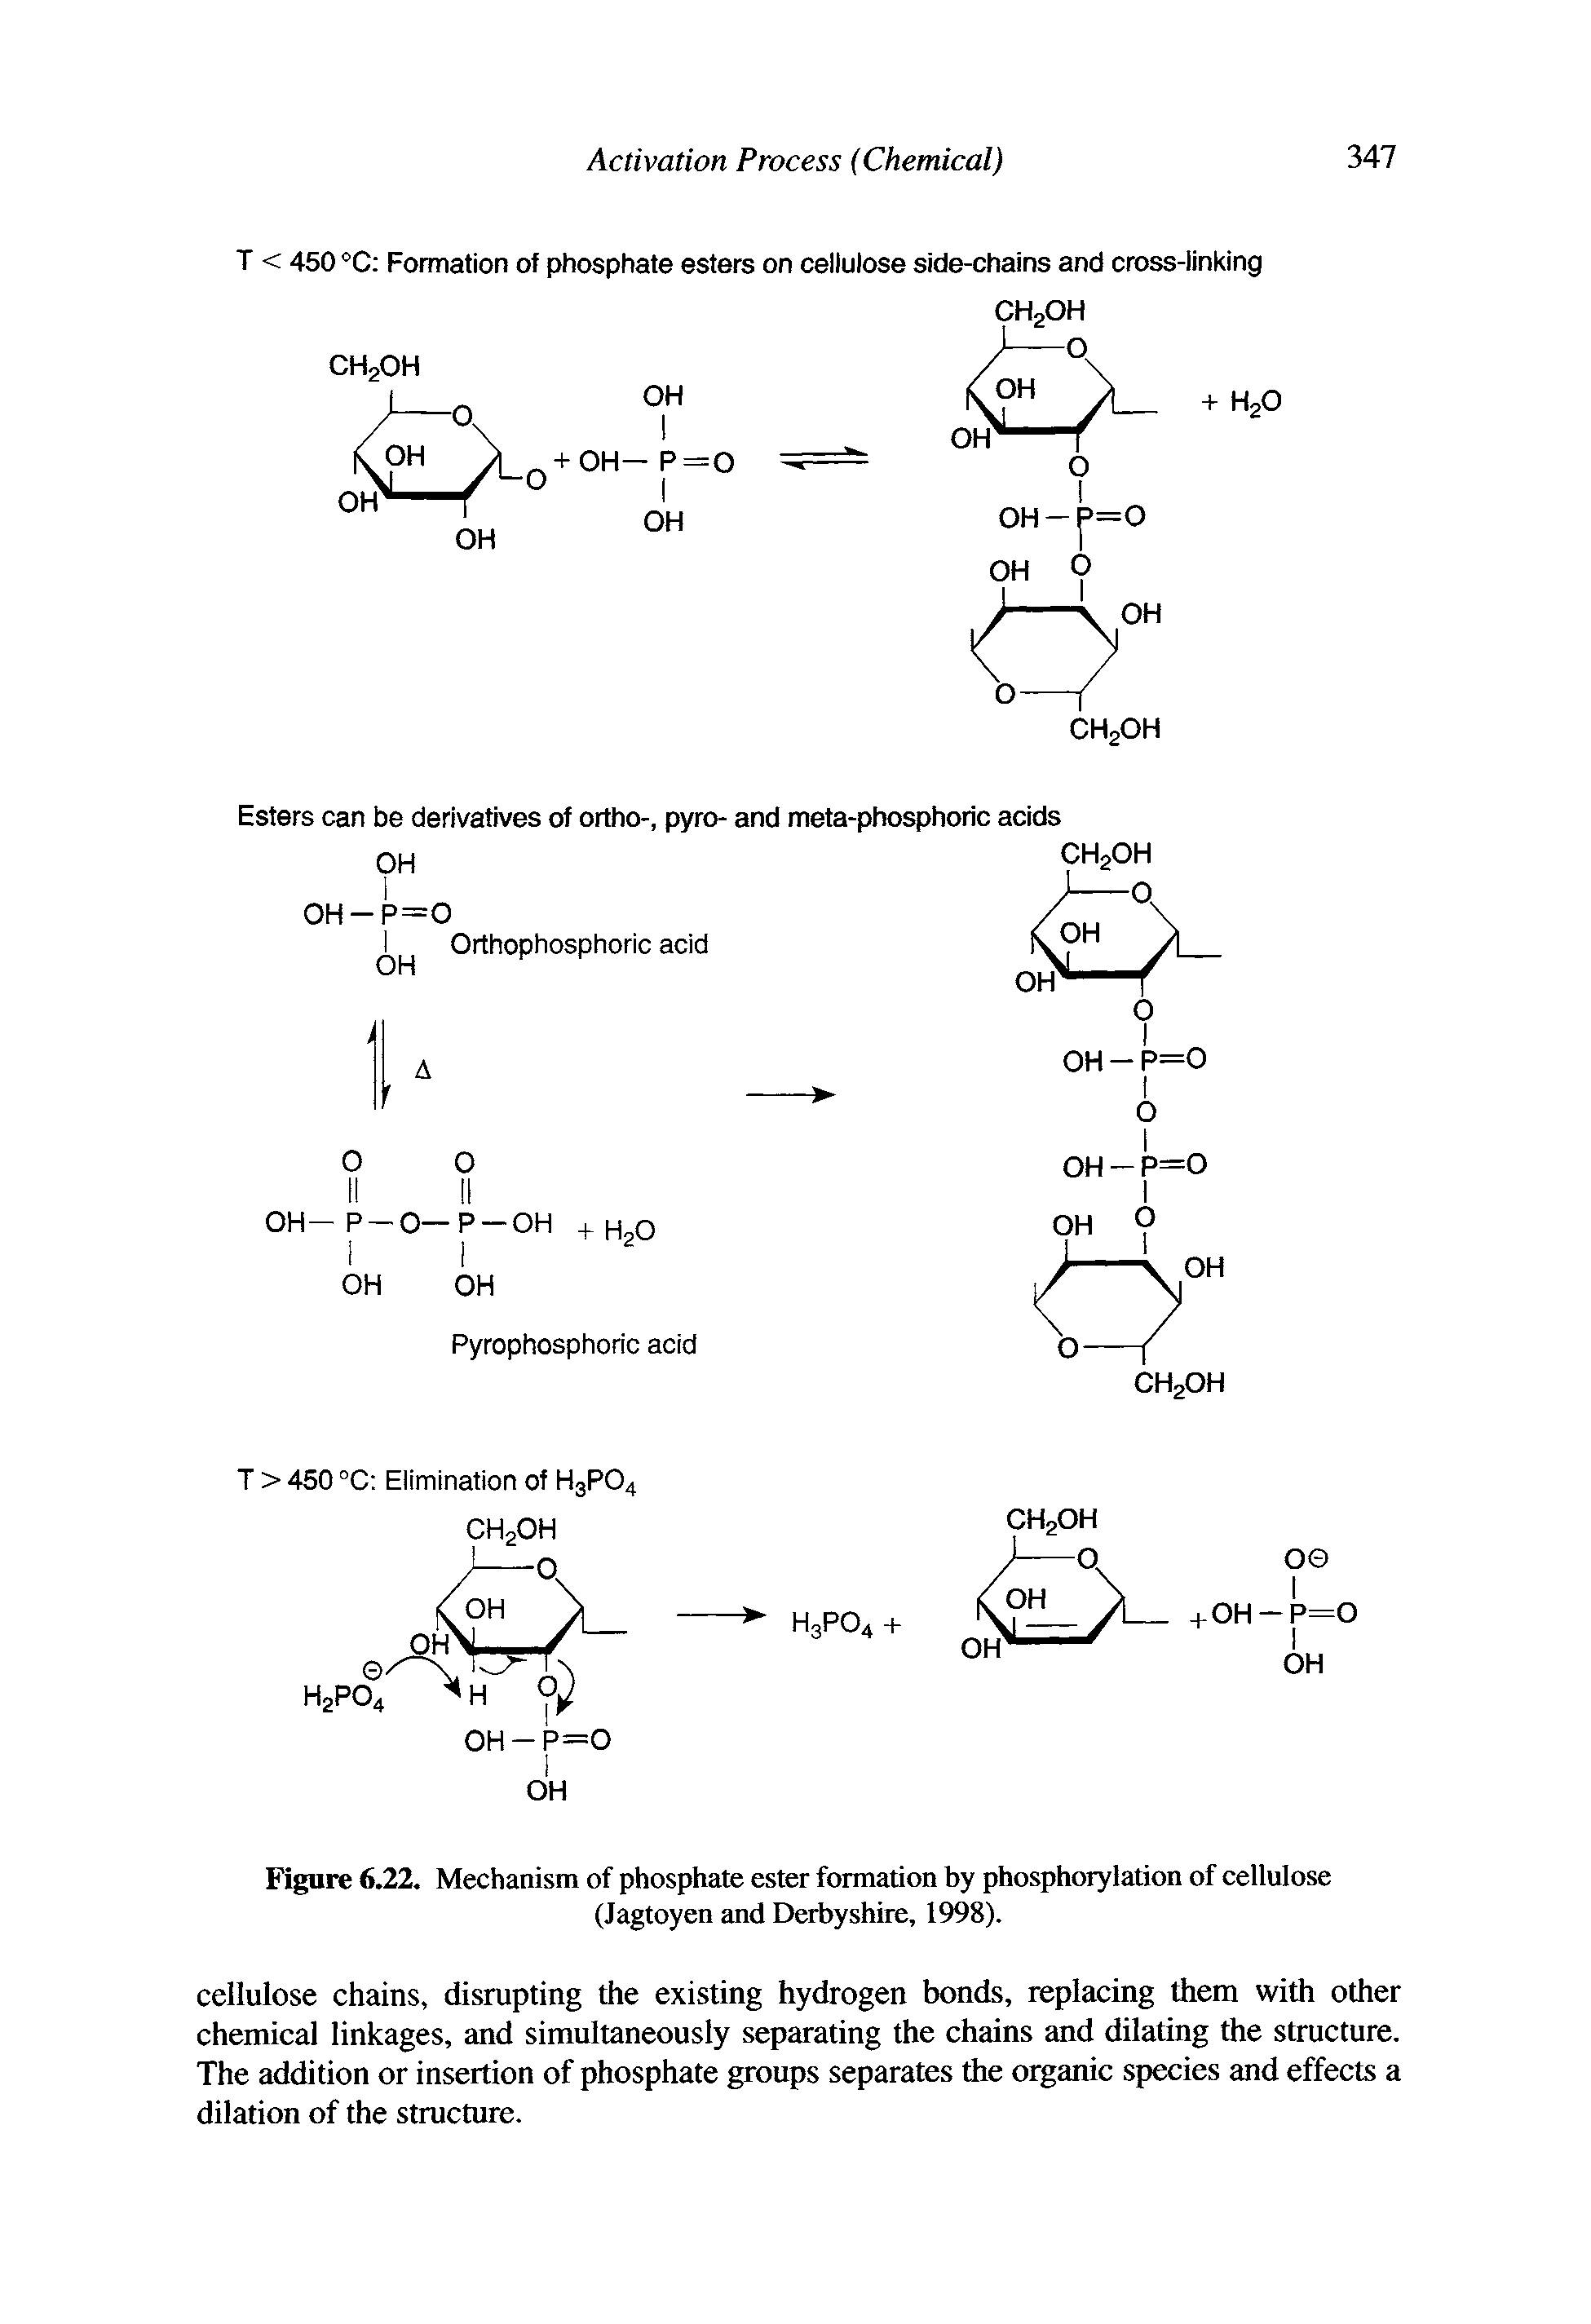 Figure 6.22. Mechanism of phosphate ester formation by phosphorylation of cellulose (Jagtoyen and Derbyshire, 1998).